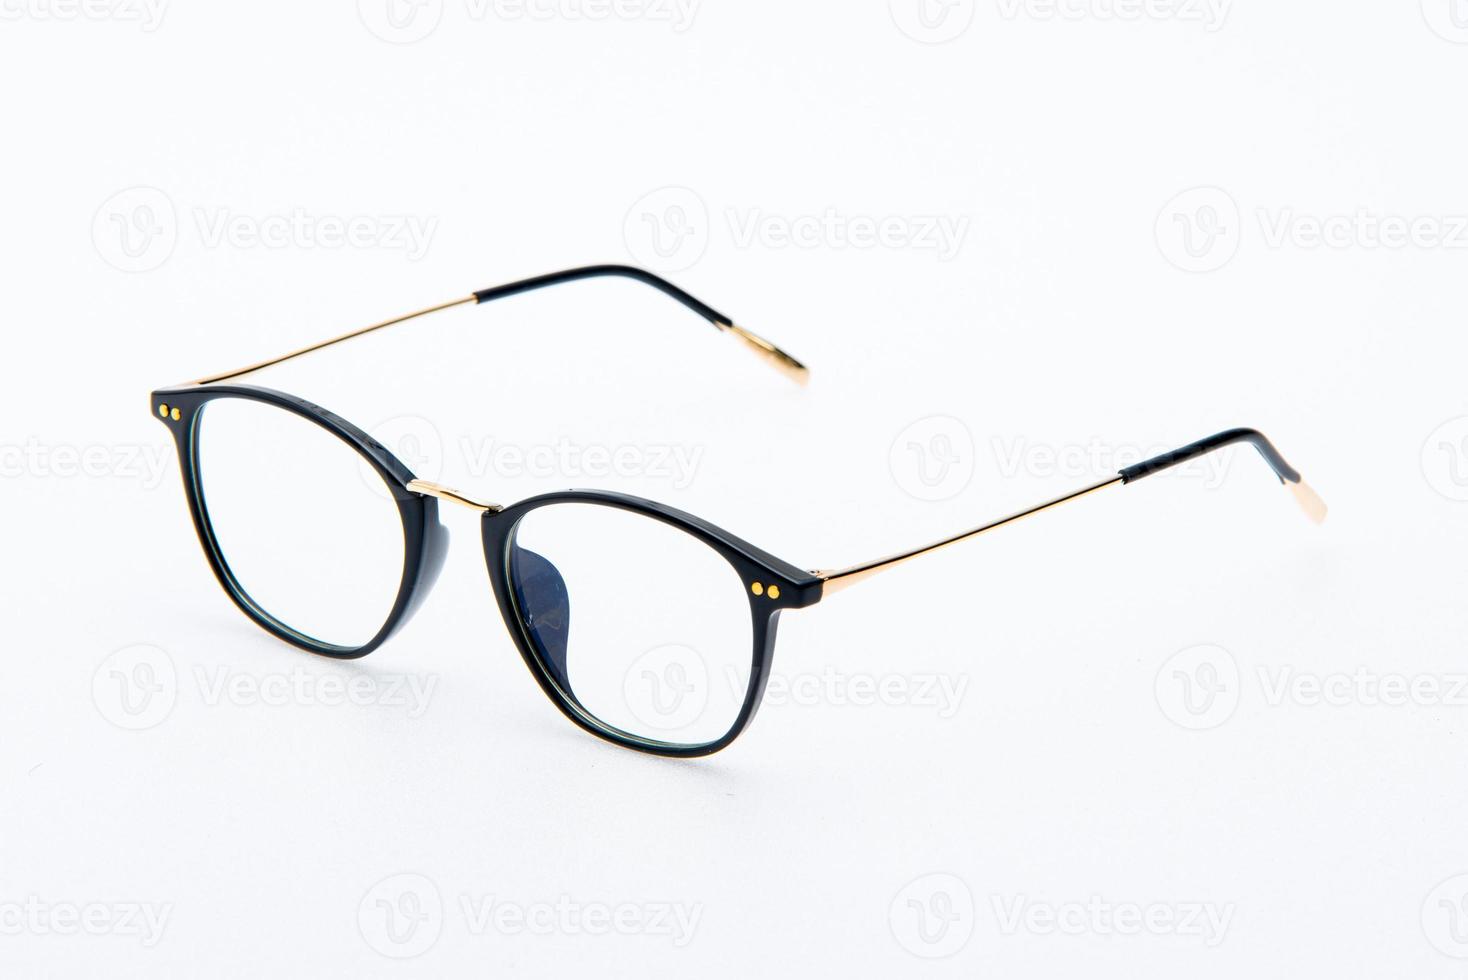 mode zonnebril zwarte frames op witte achtergrond. foto